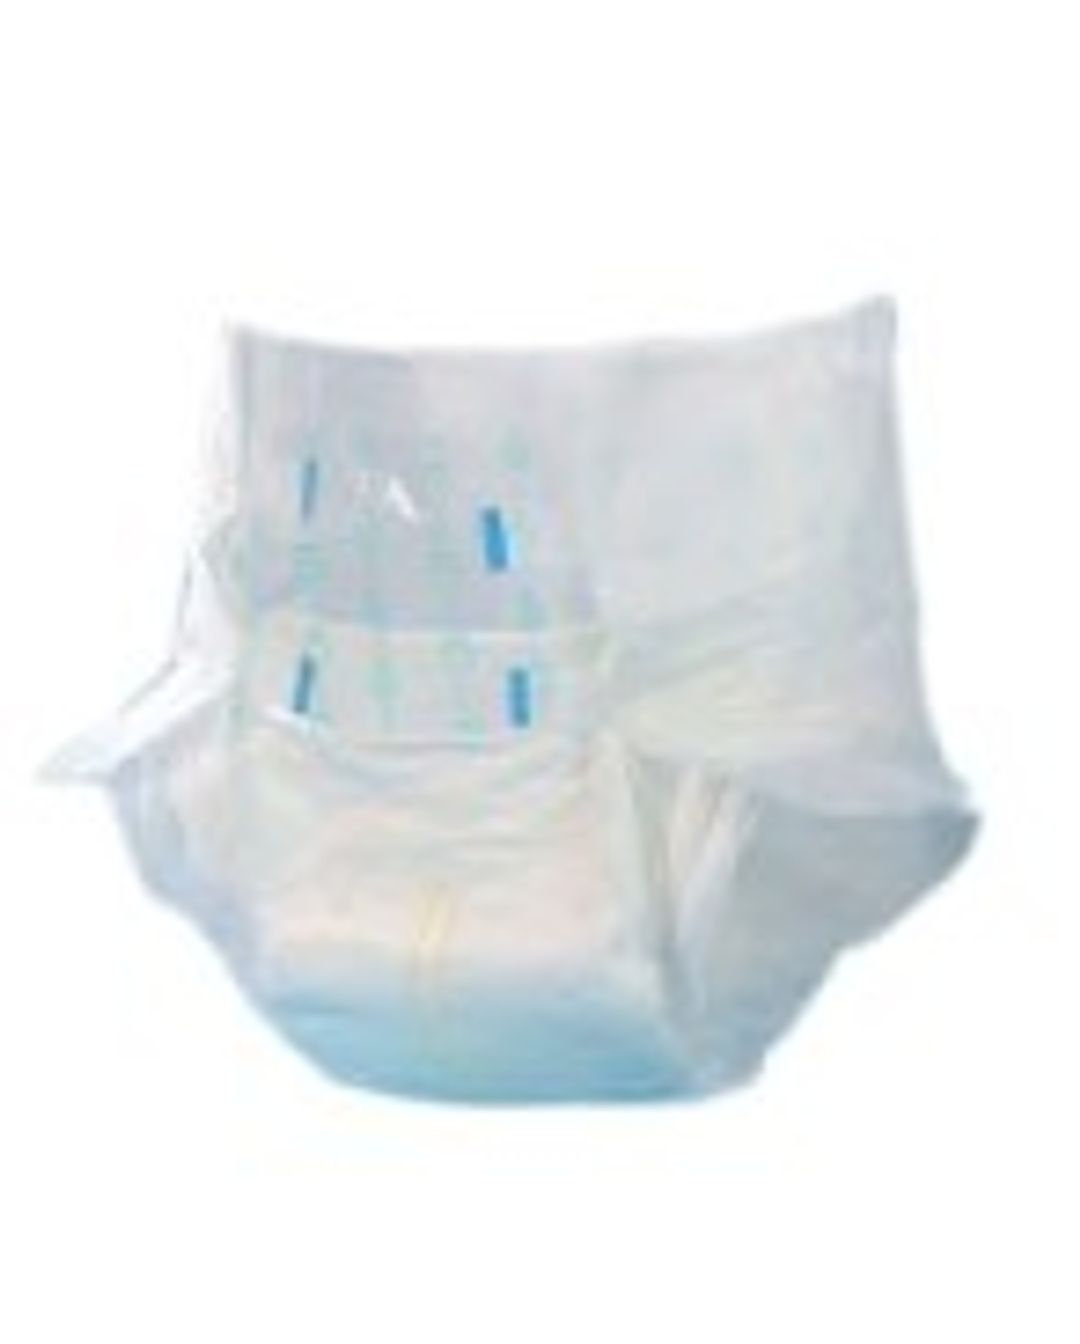 Proinn Adult Diaper - Medium (JD3150) Pack Of 10